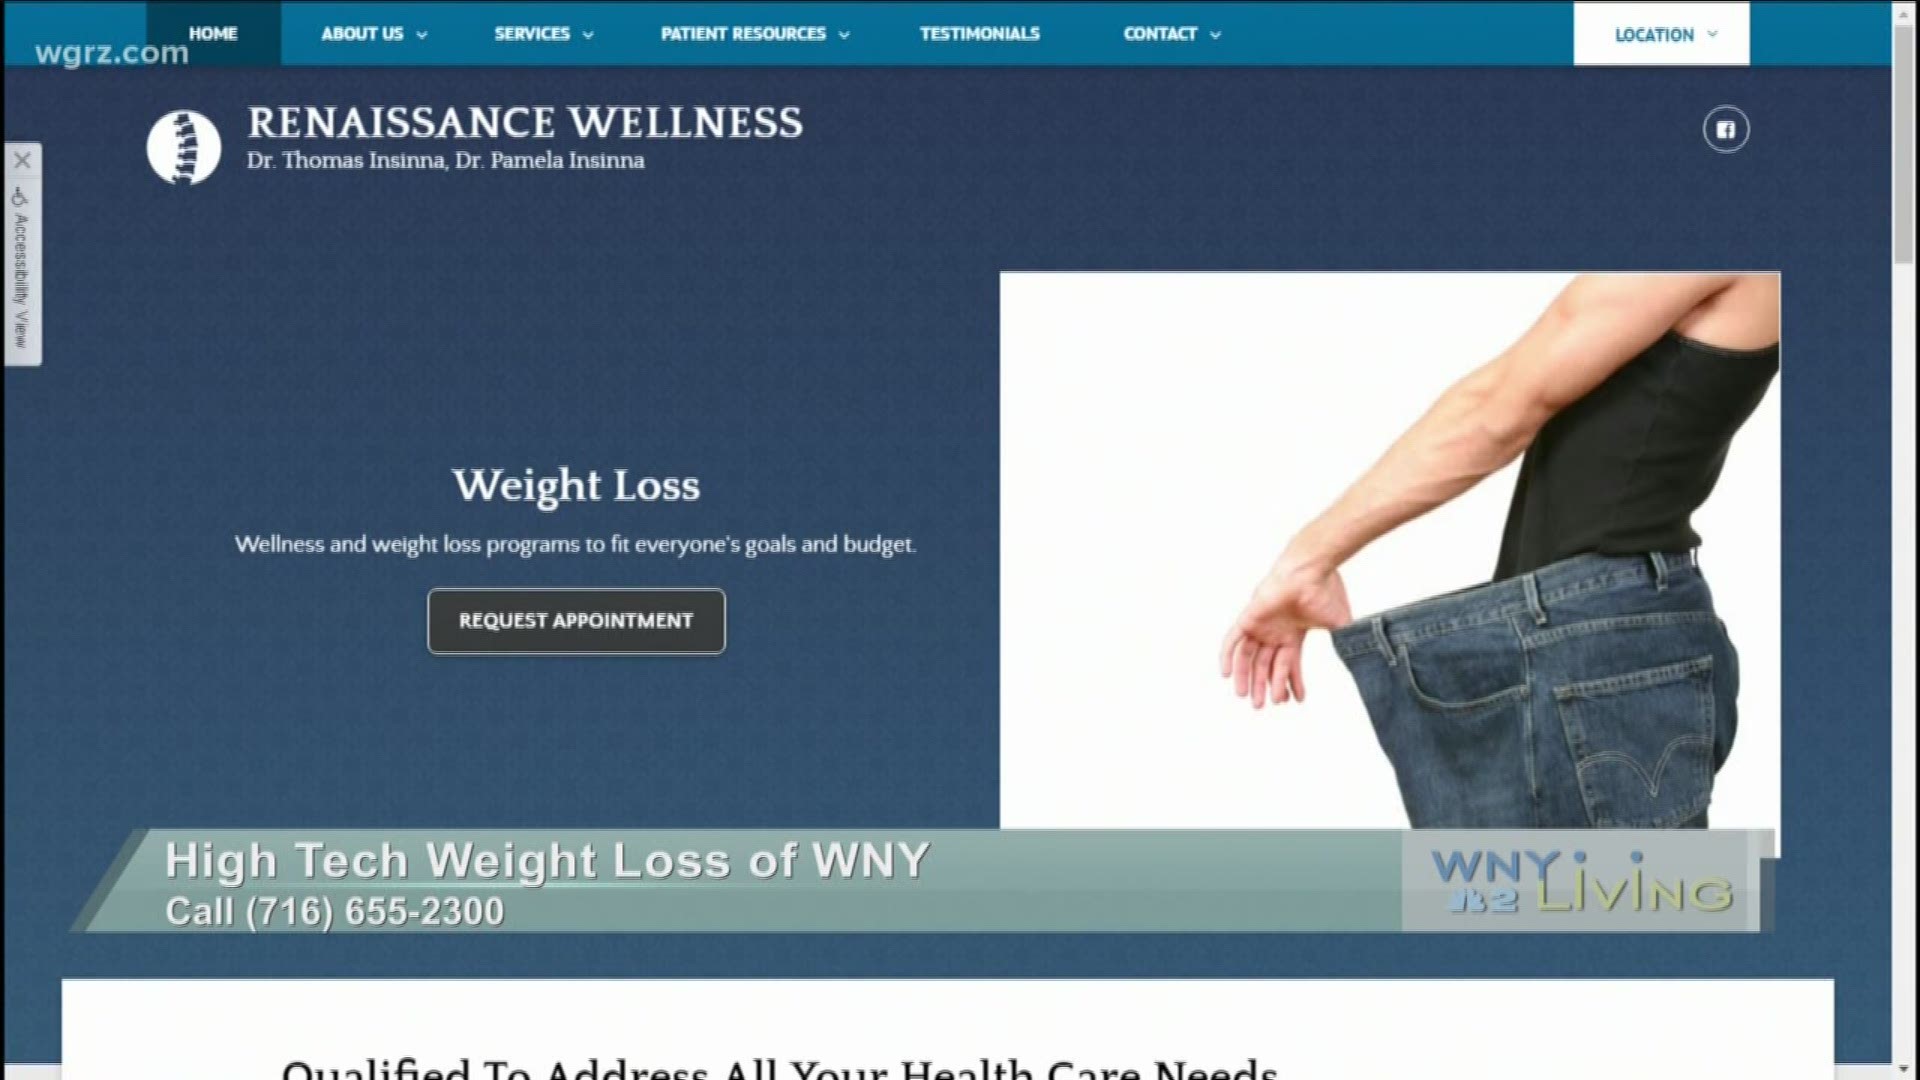 WNY Living - July 2 - High Tech Weight Loss of WNY